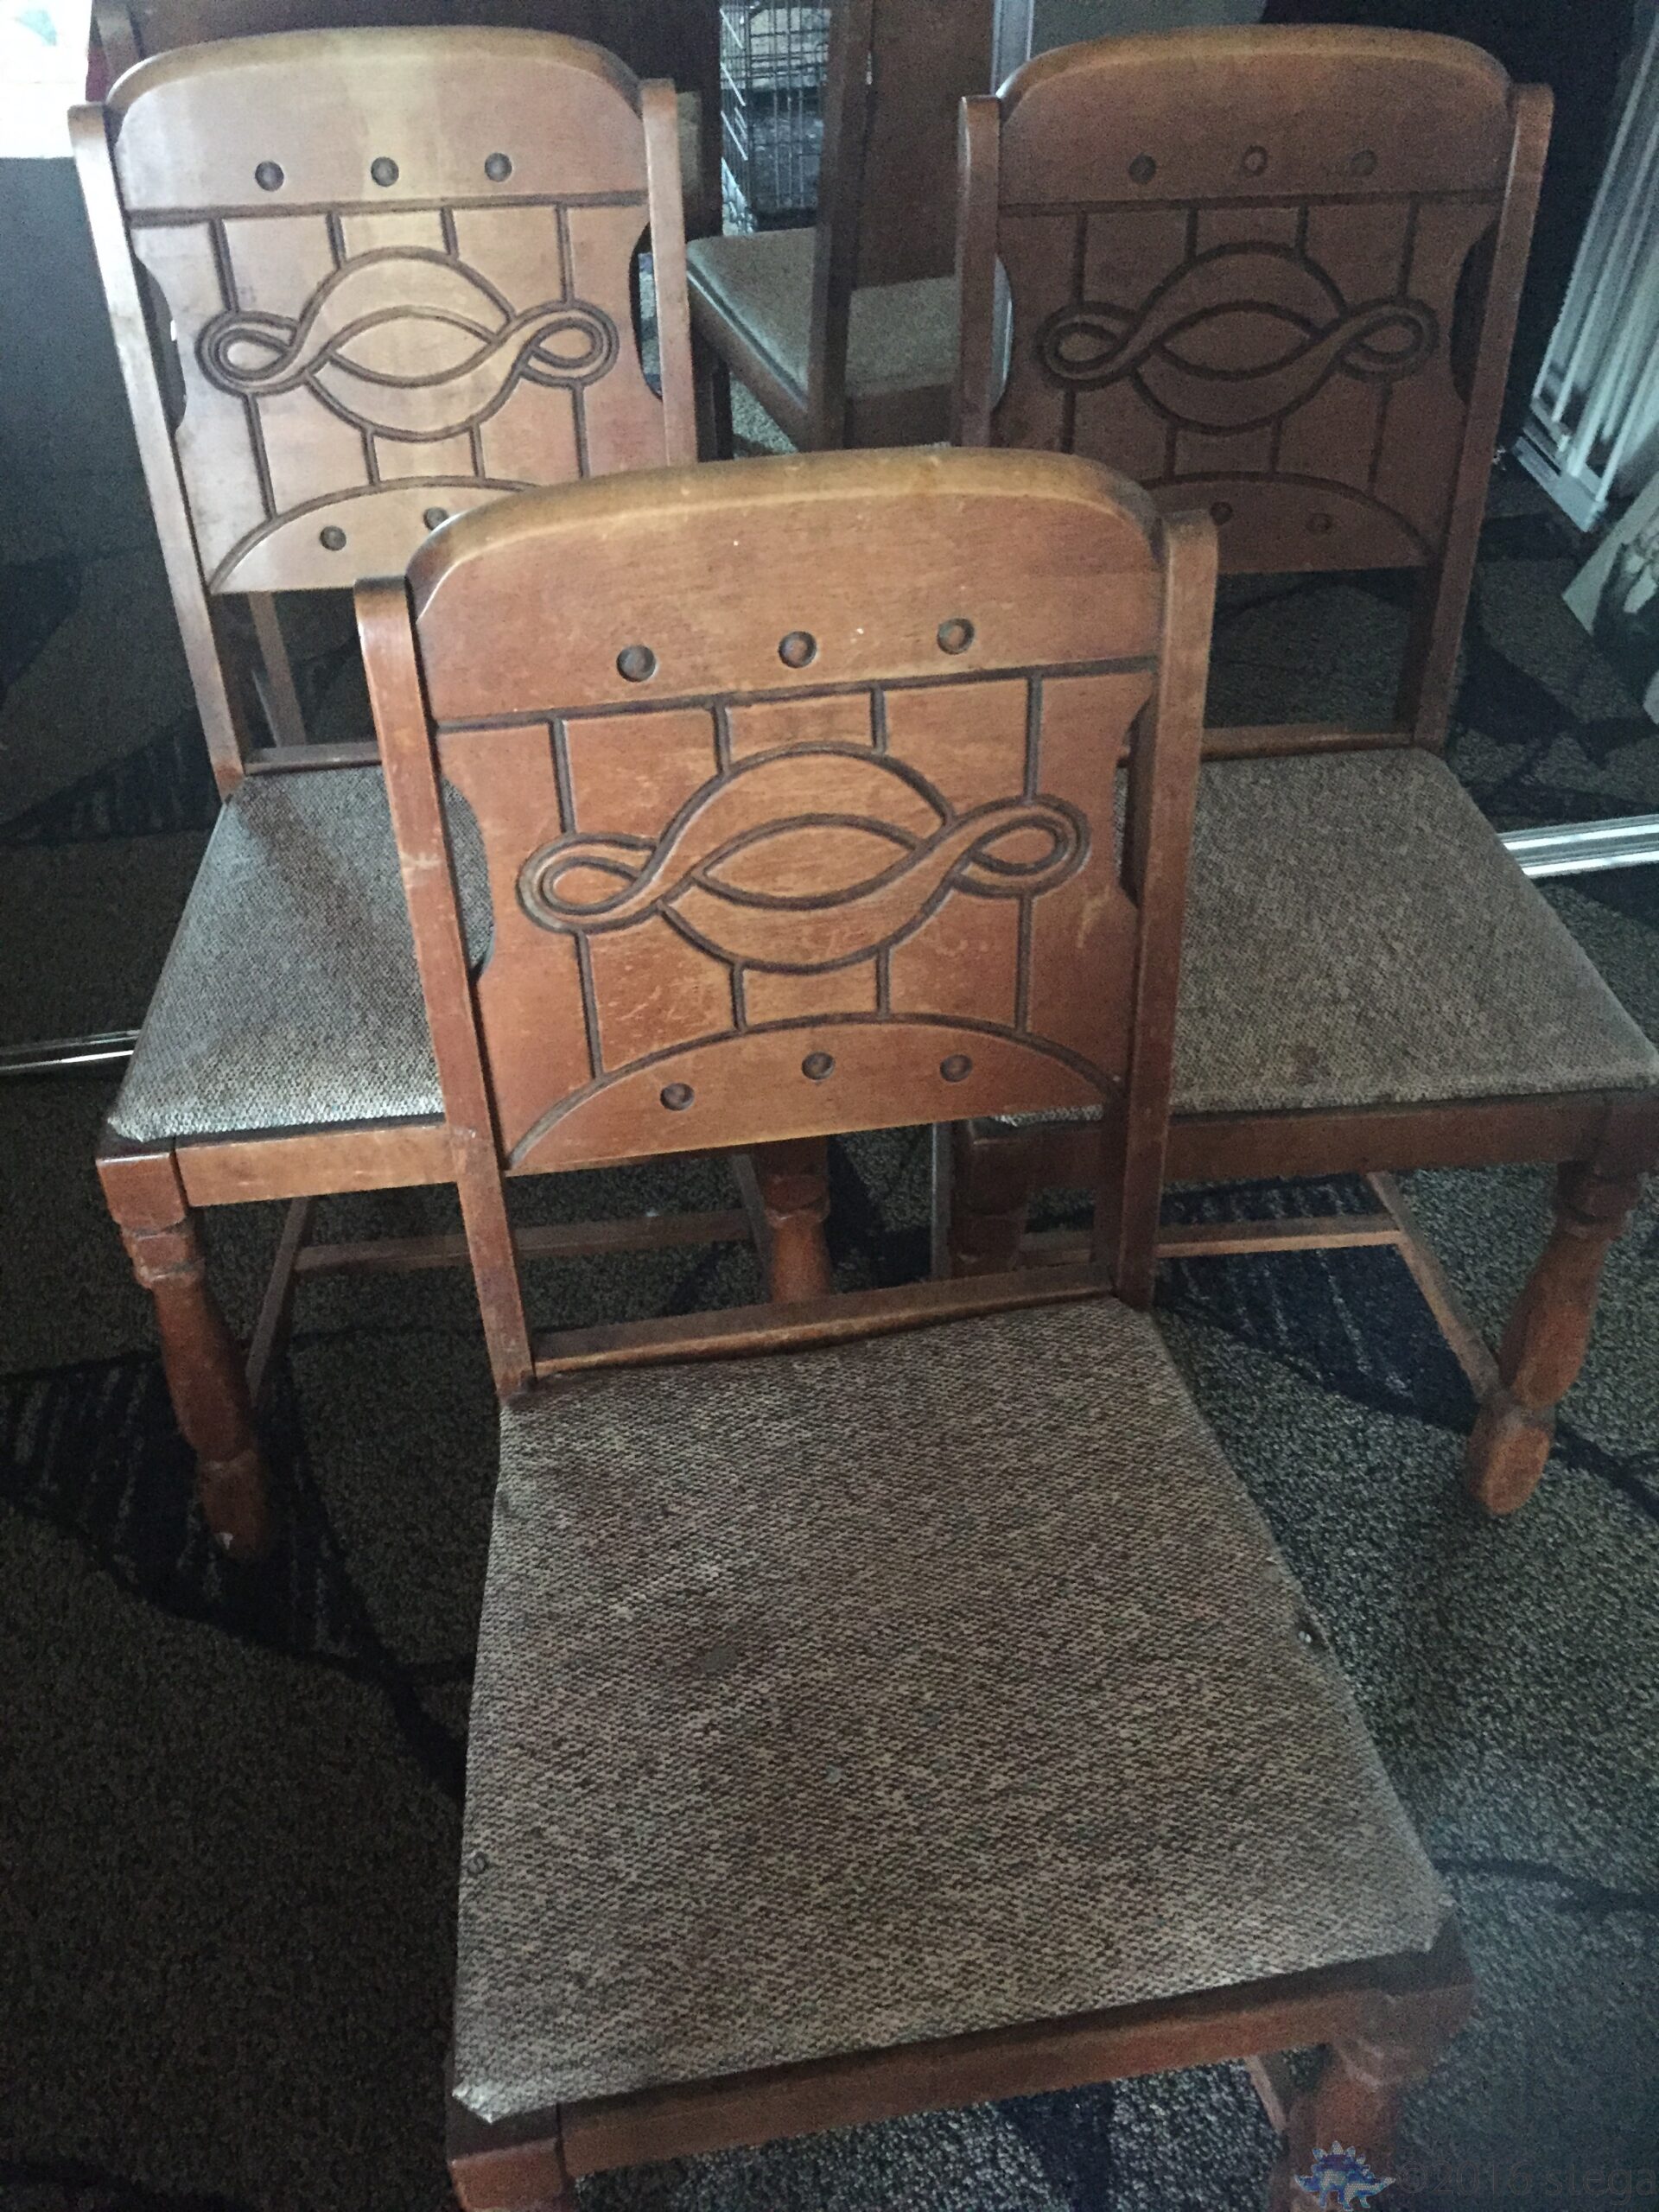 Grandma's chairs